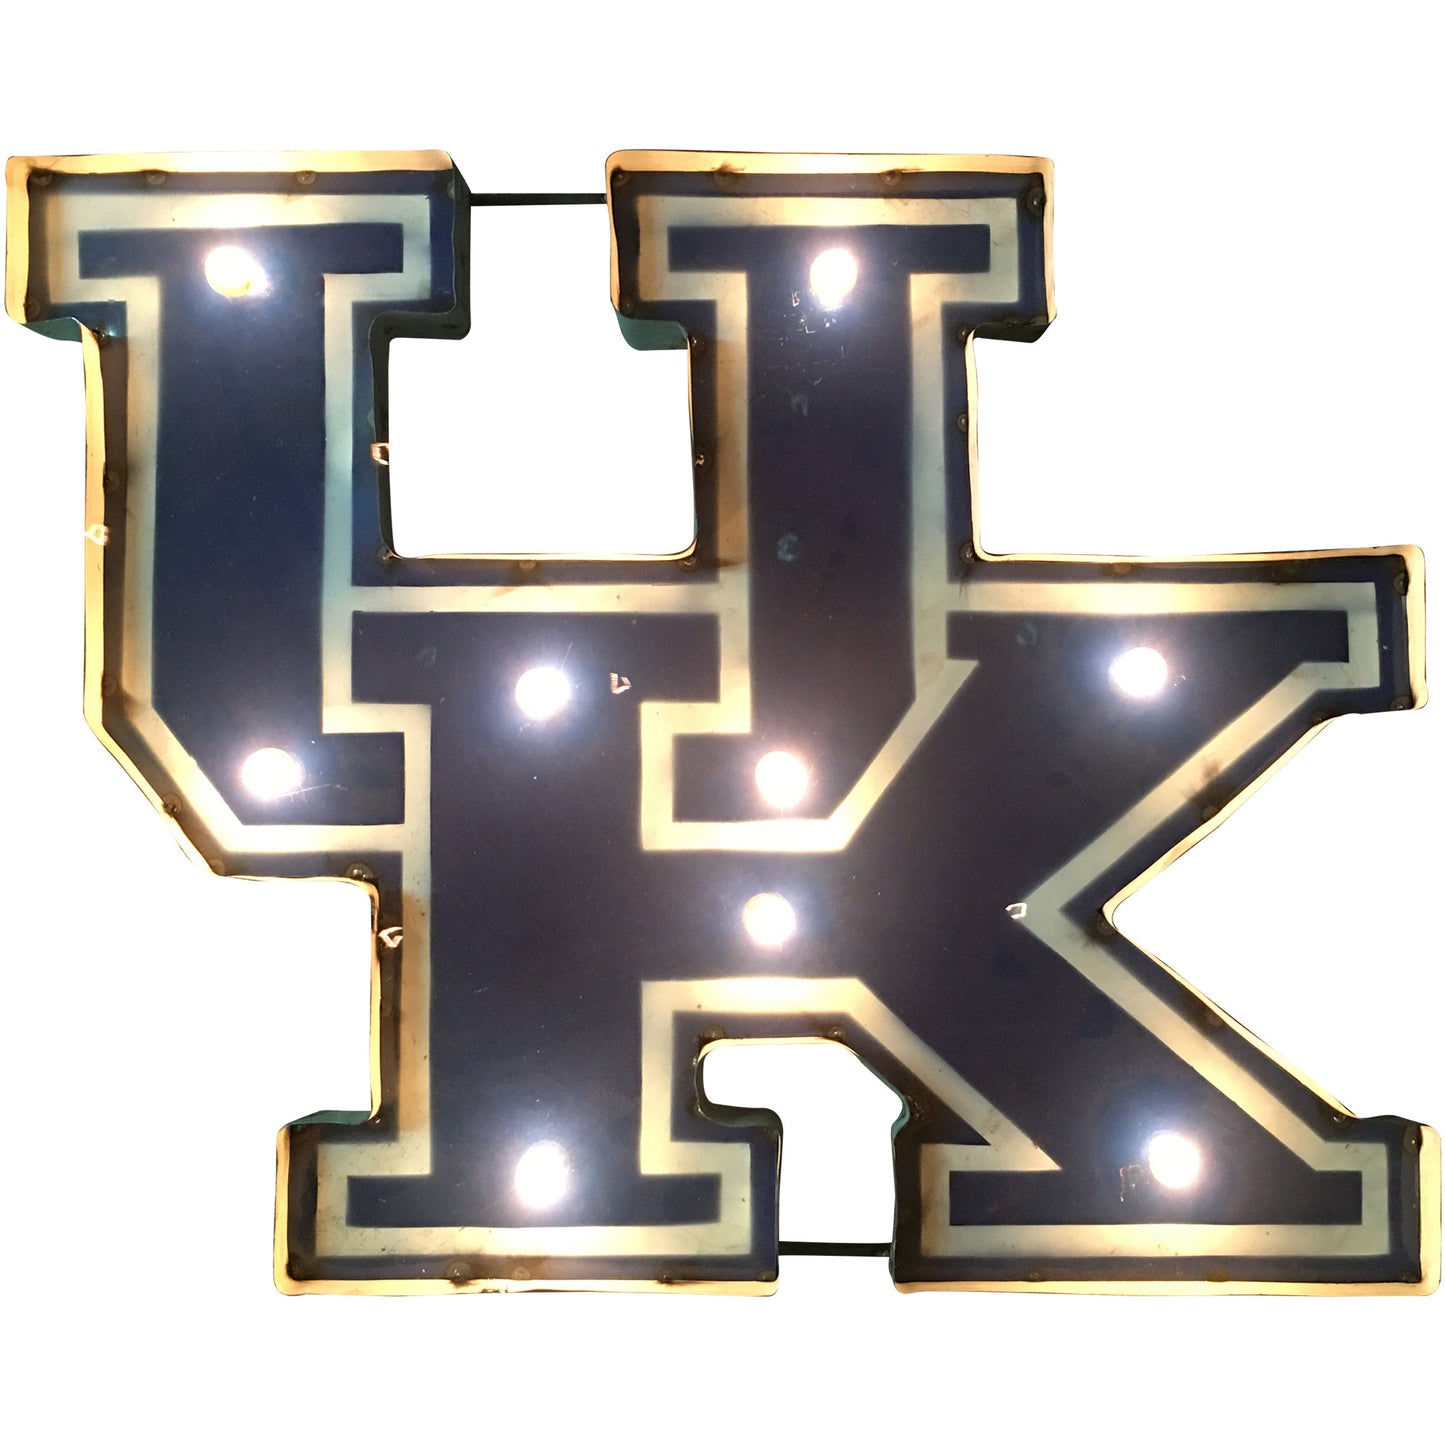 University of Kentucky "UK" Lighted Recycled Metal Wall Decor